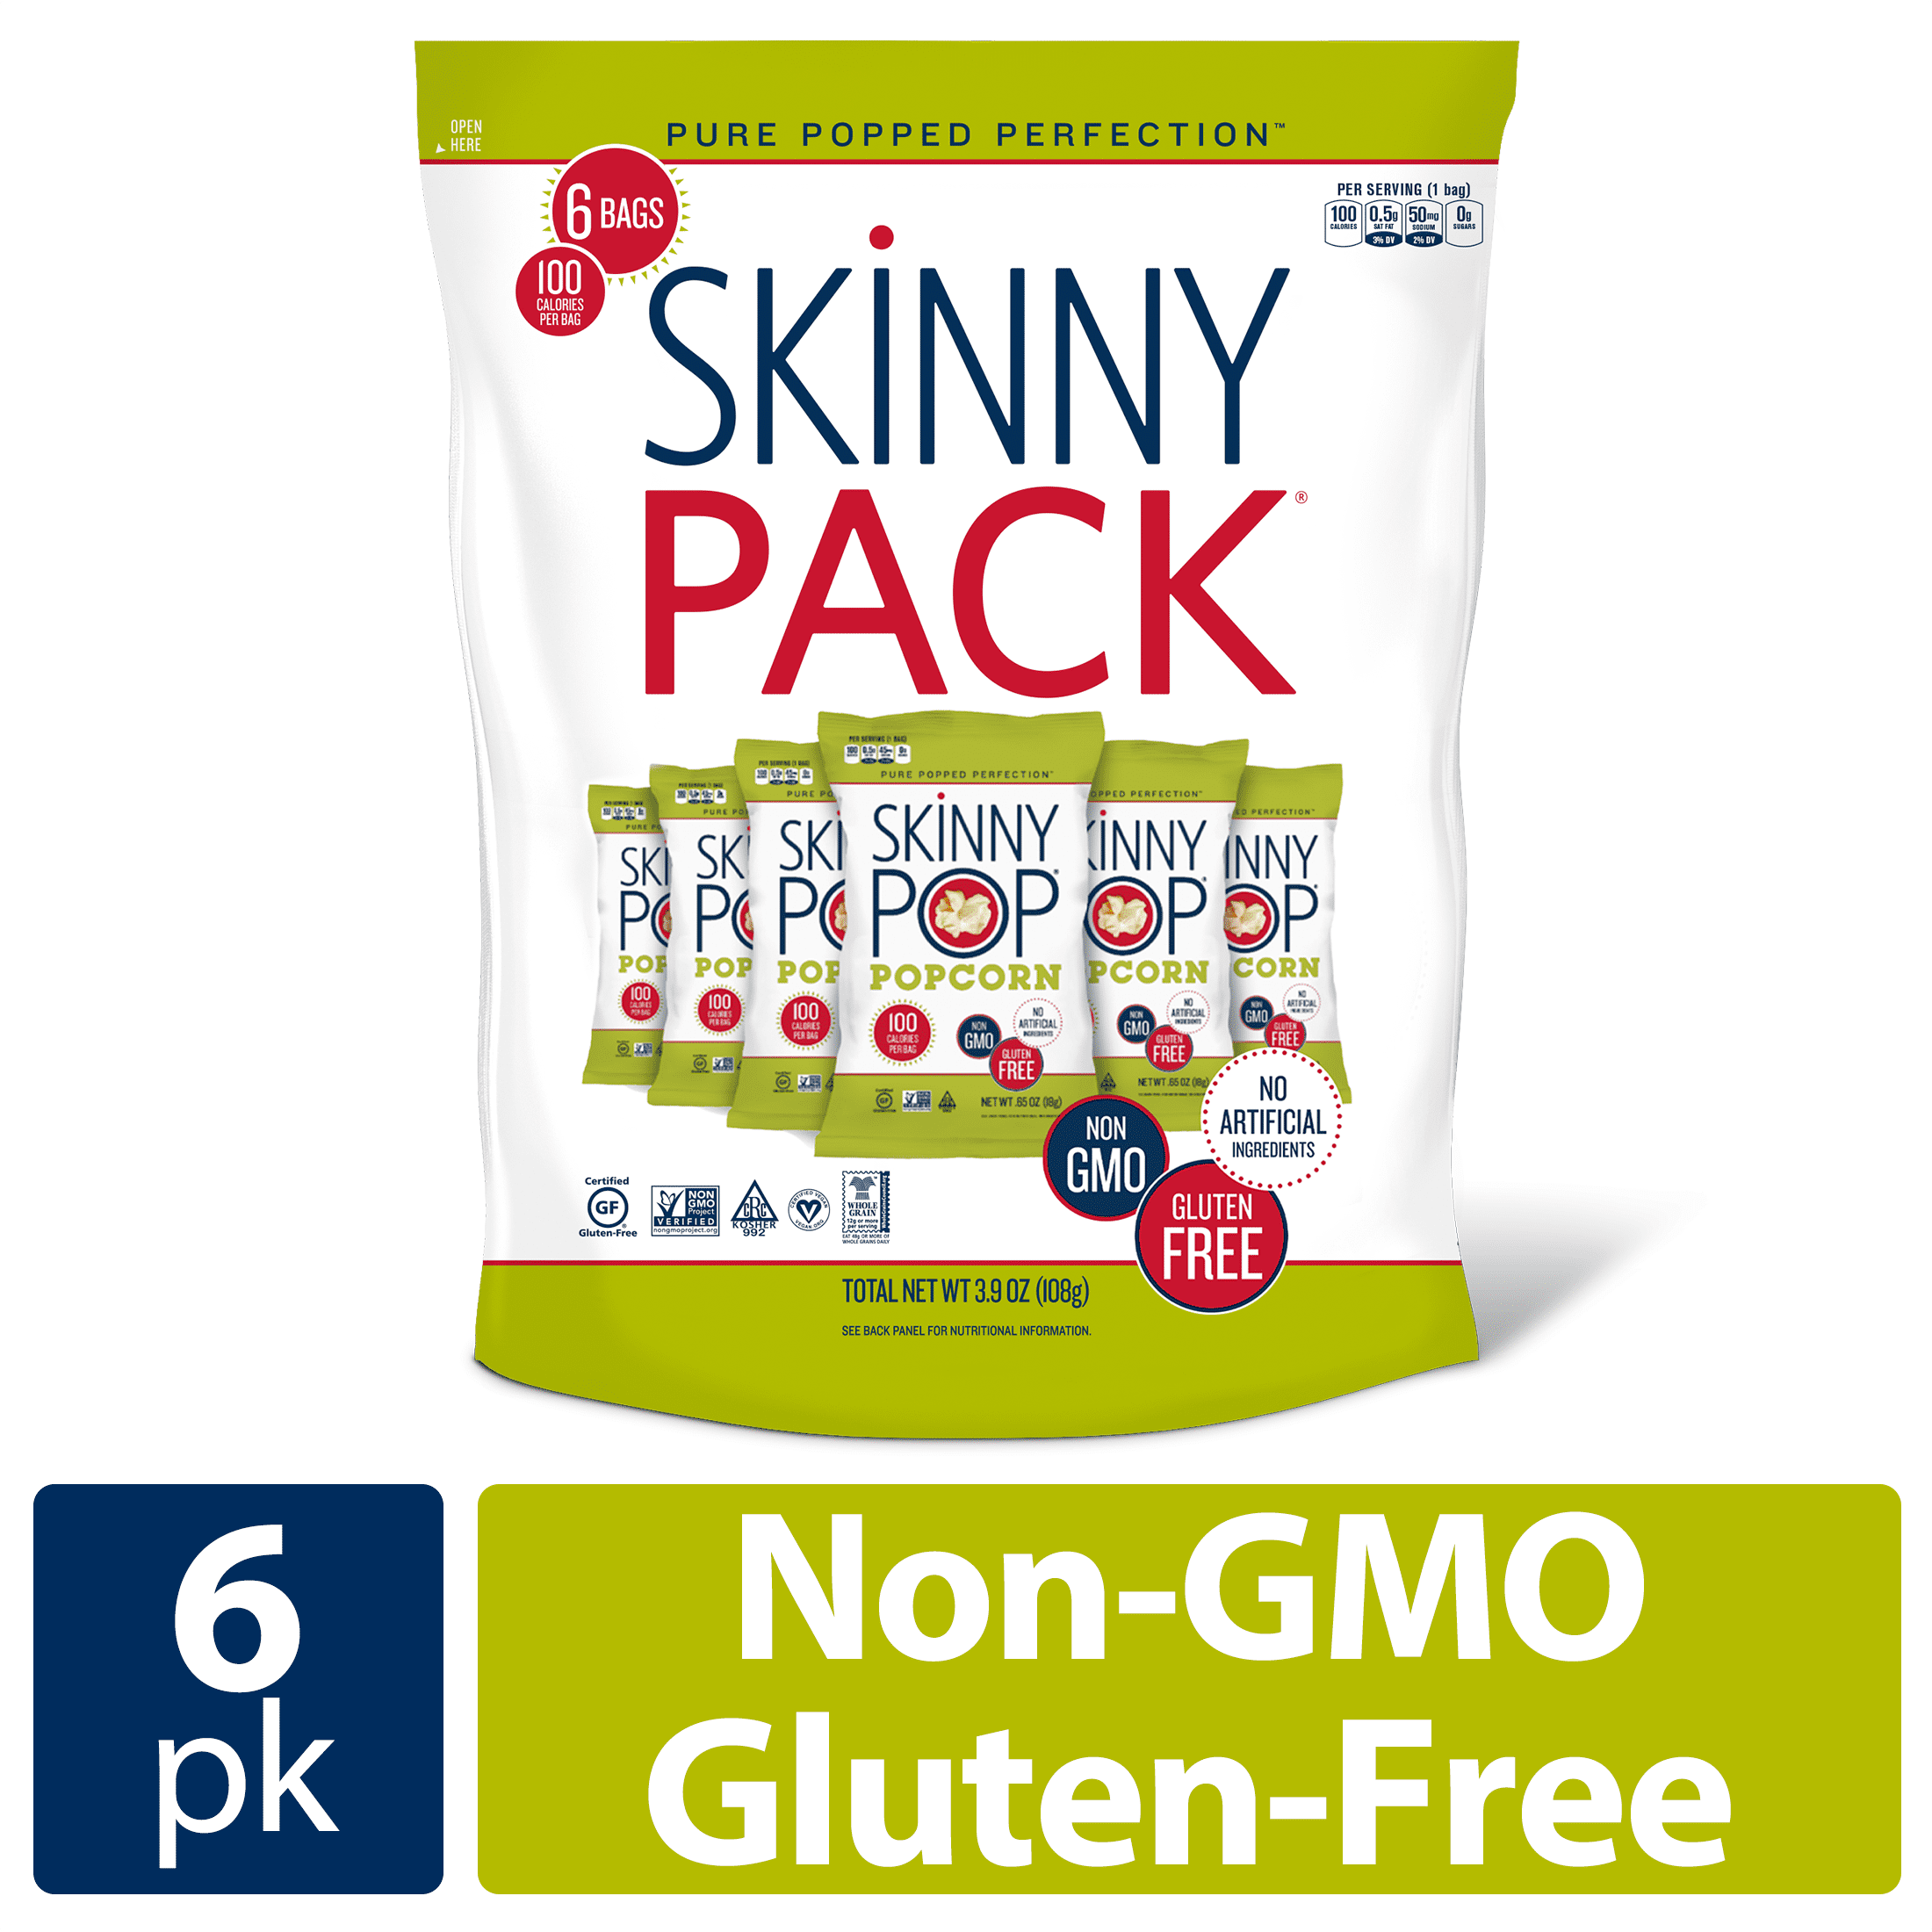 SkinnyPop Gluten-Free Original Popcorn Skinny Pack, 0.65 oz, 6 Count